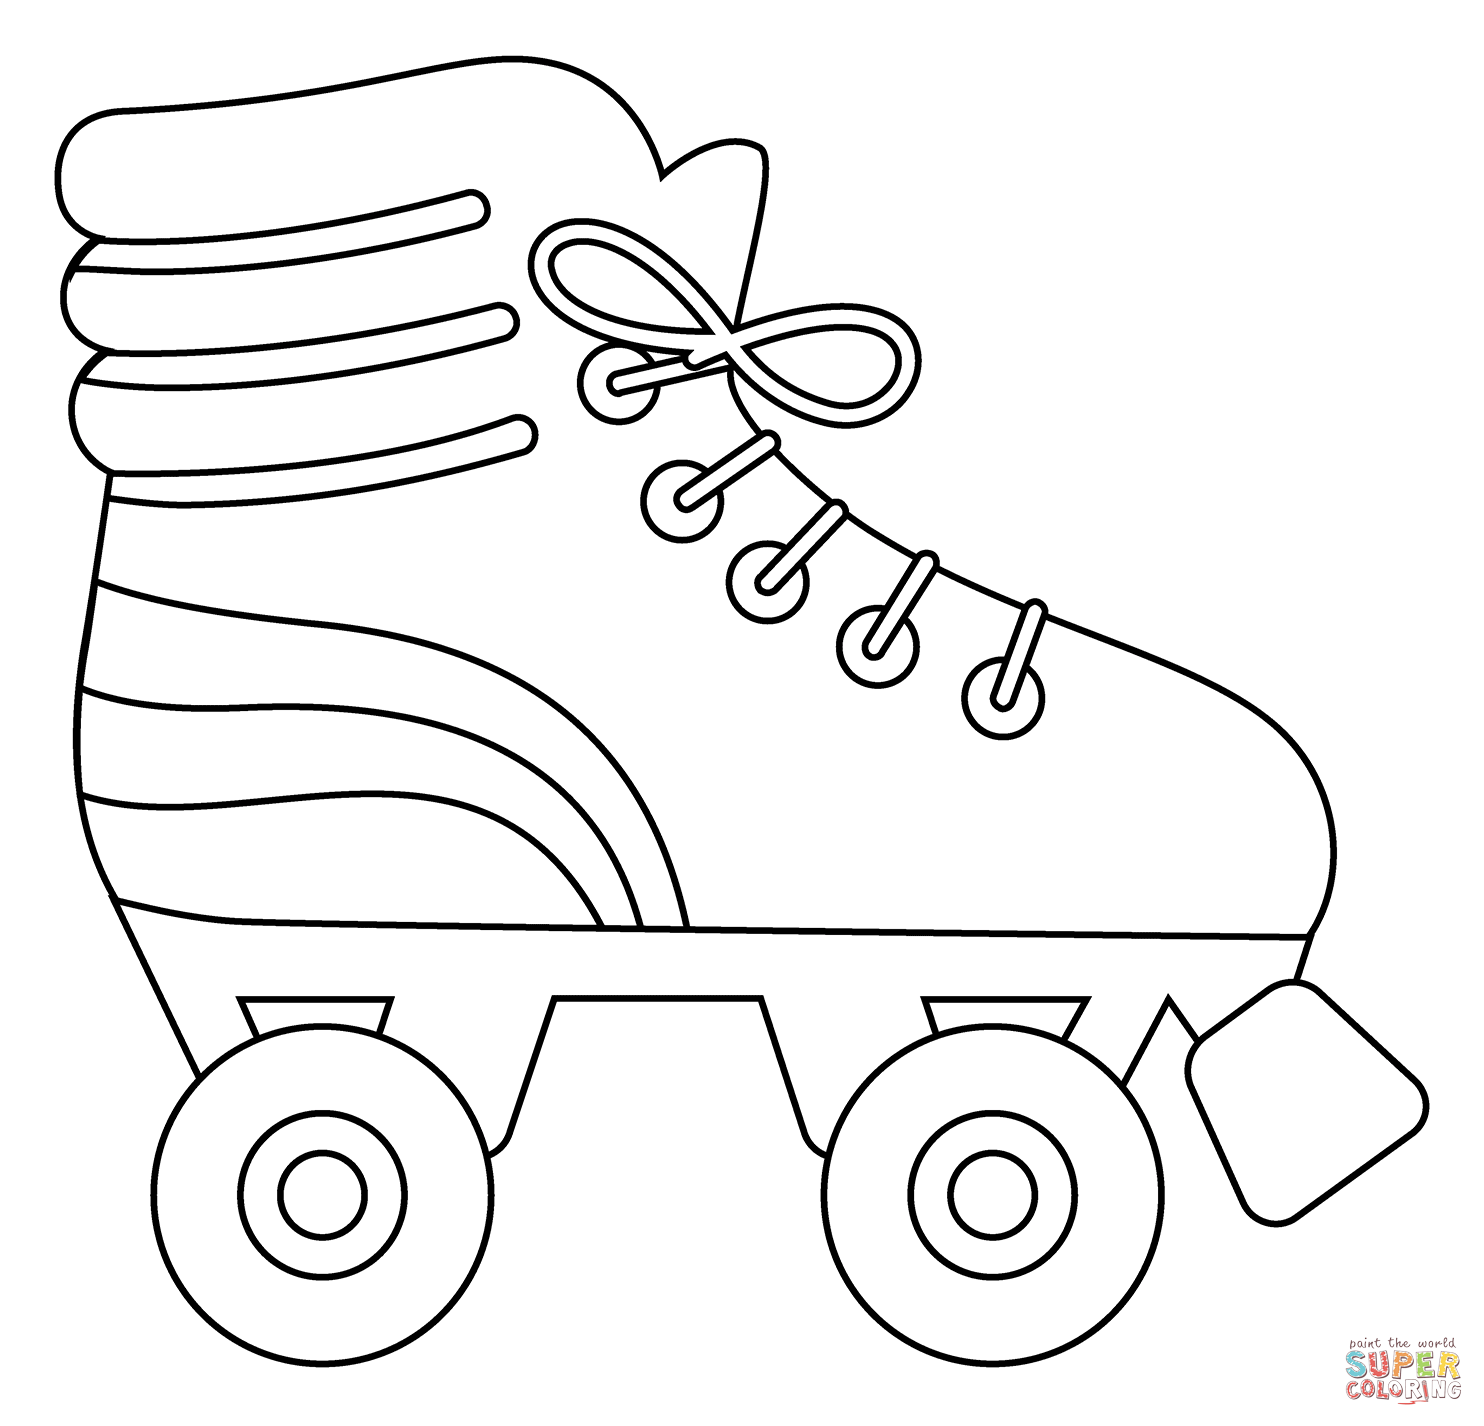 Roller Skate Emoji coloring page | Free Printable Coloring Pages